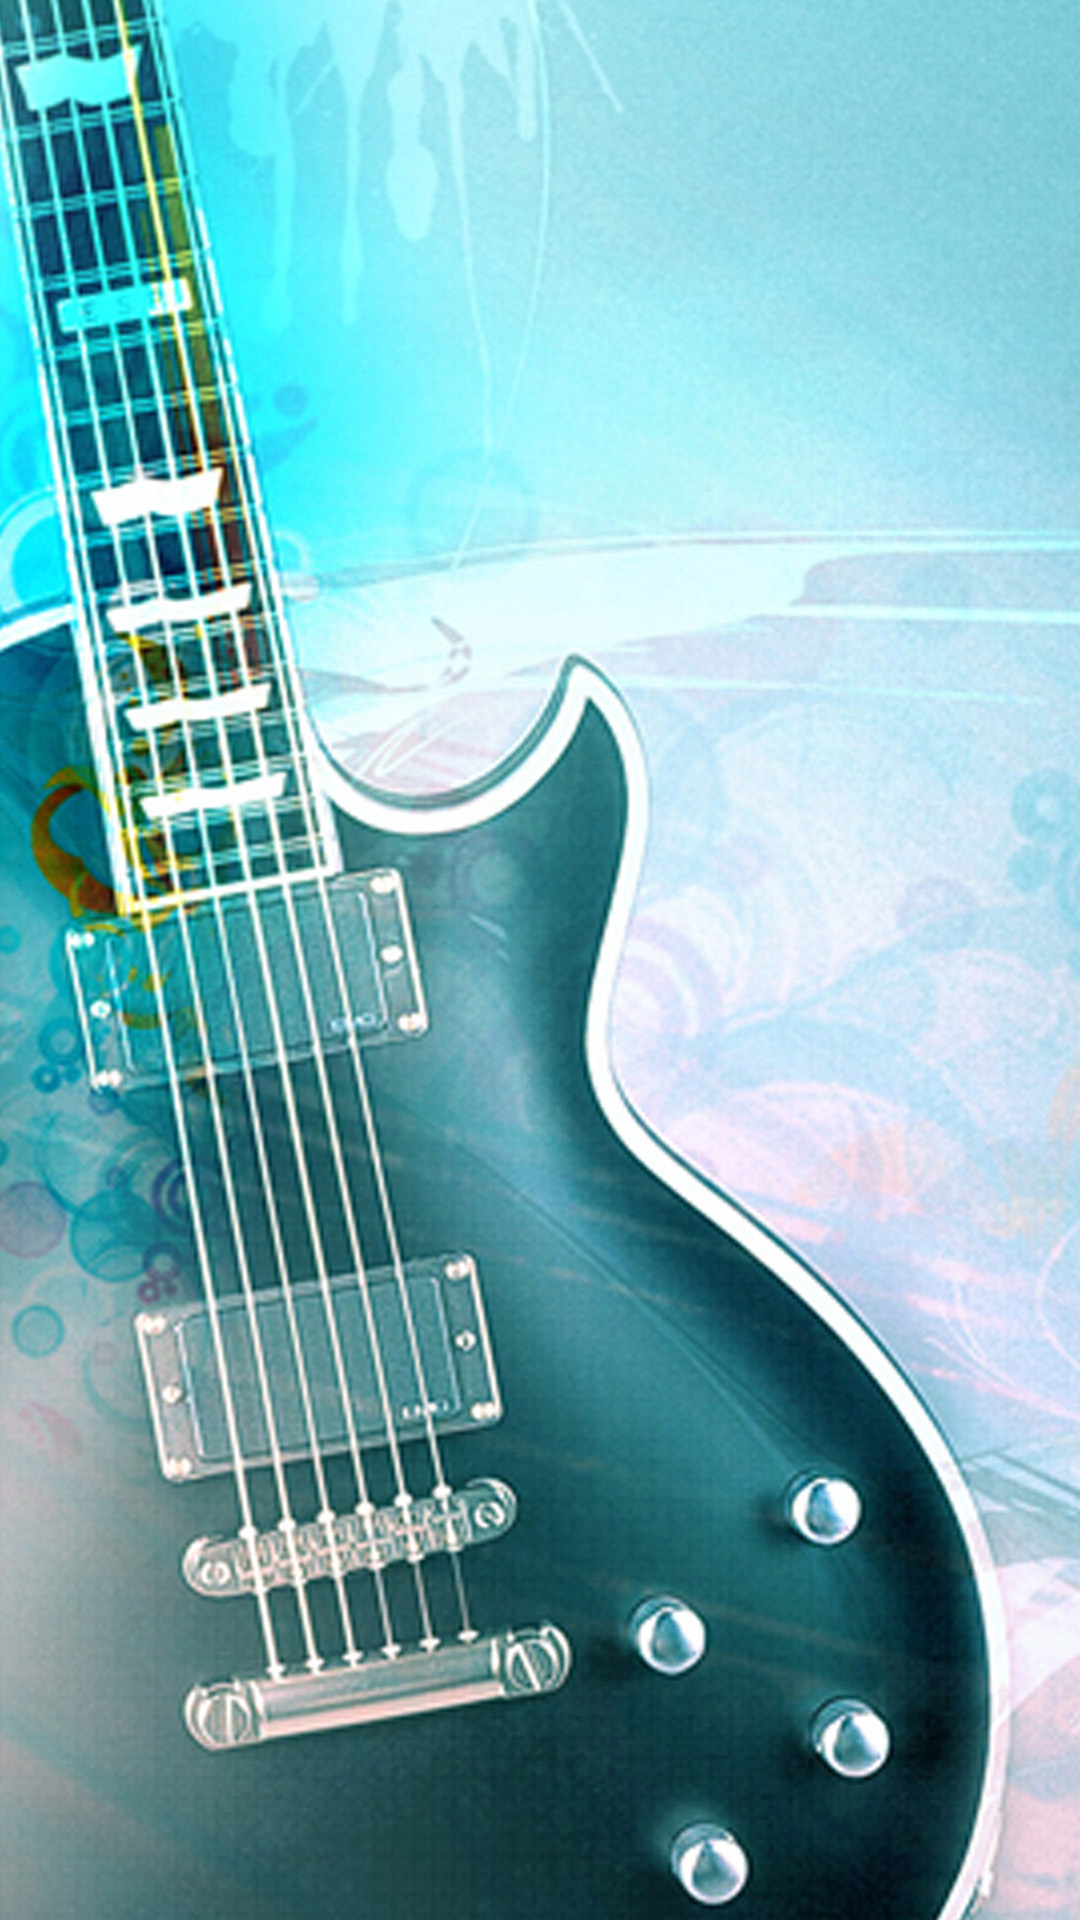 Guitar Music Wallpapers Iphone Wallpapers